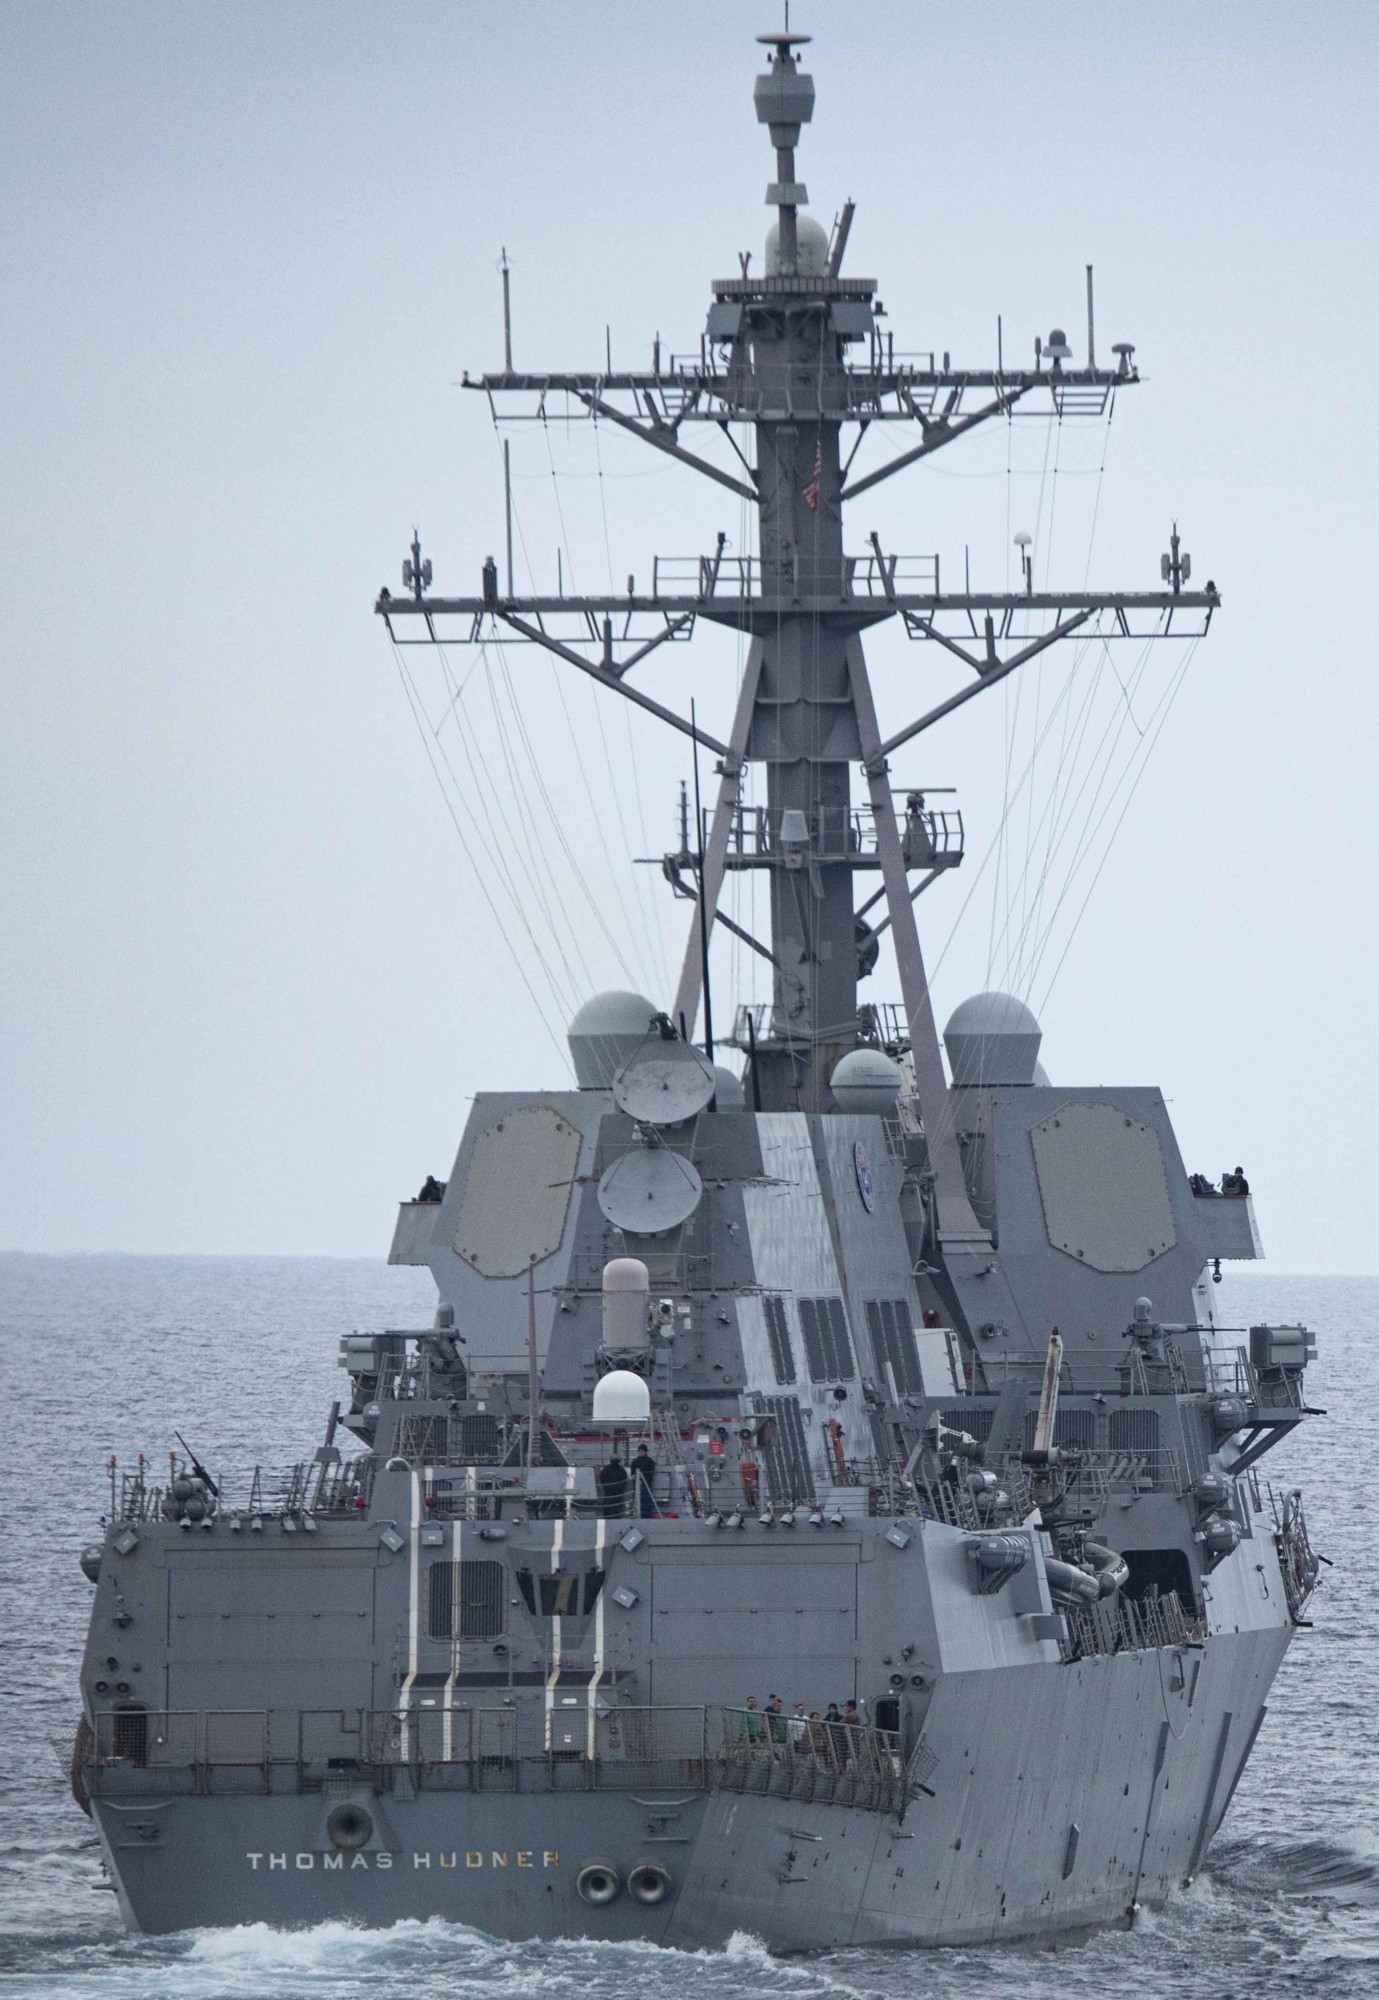 ddg-116 uss thomas hudner arleigh burke class guided missile destroyer aegis us navy 47